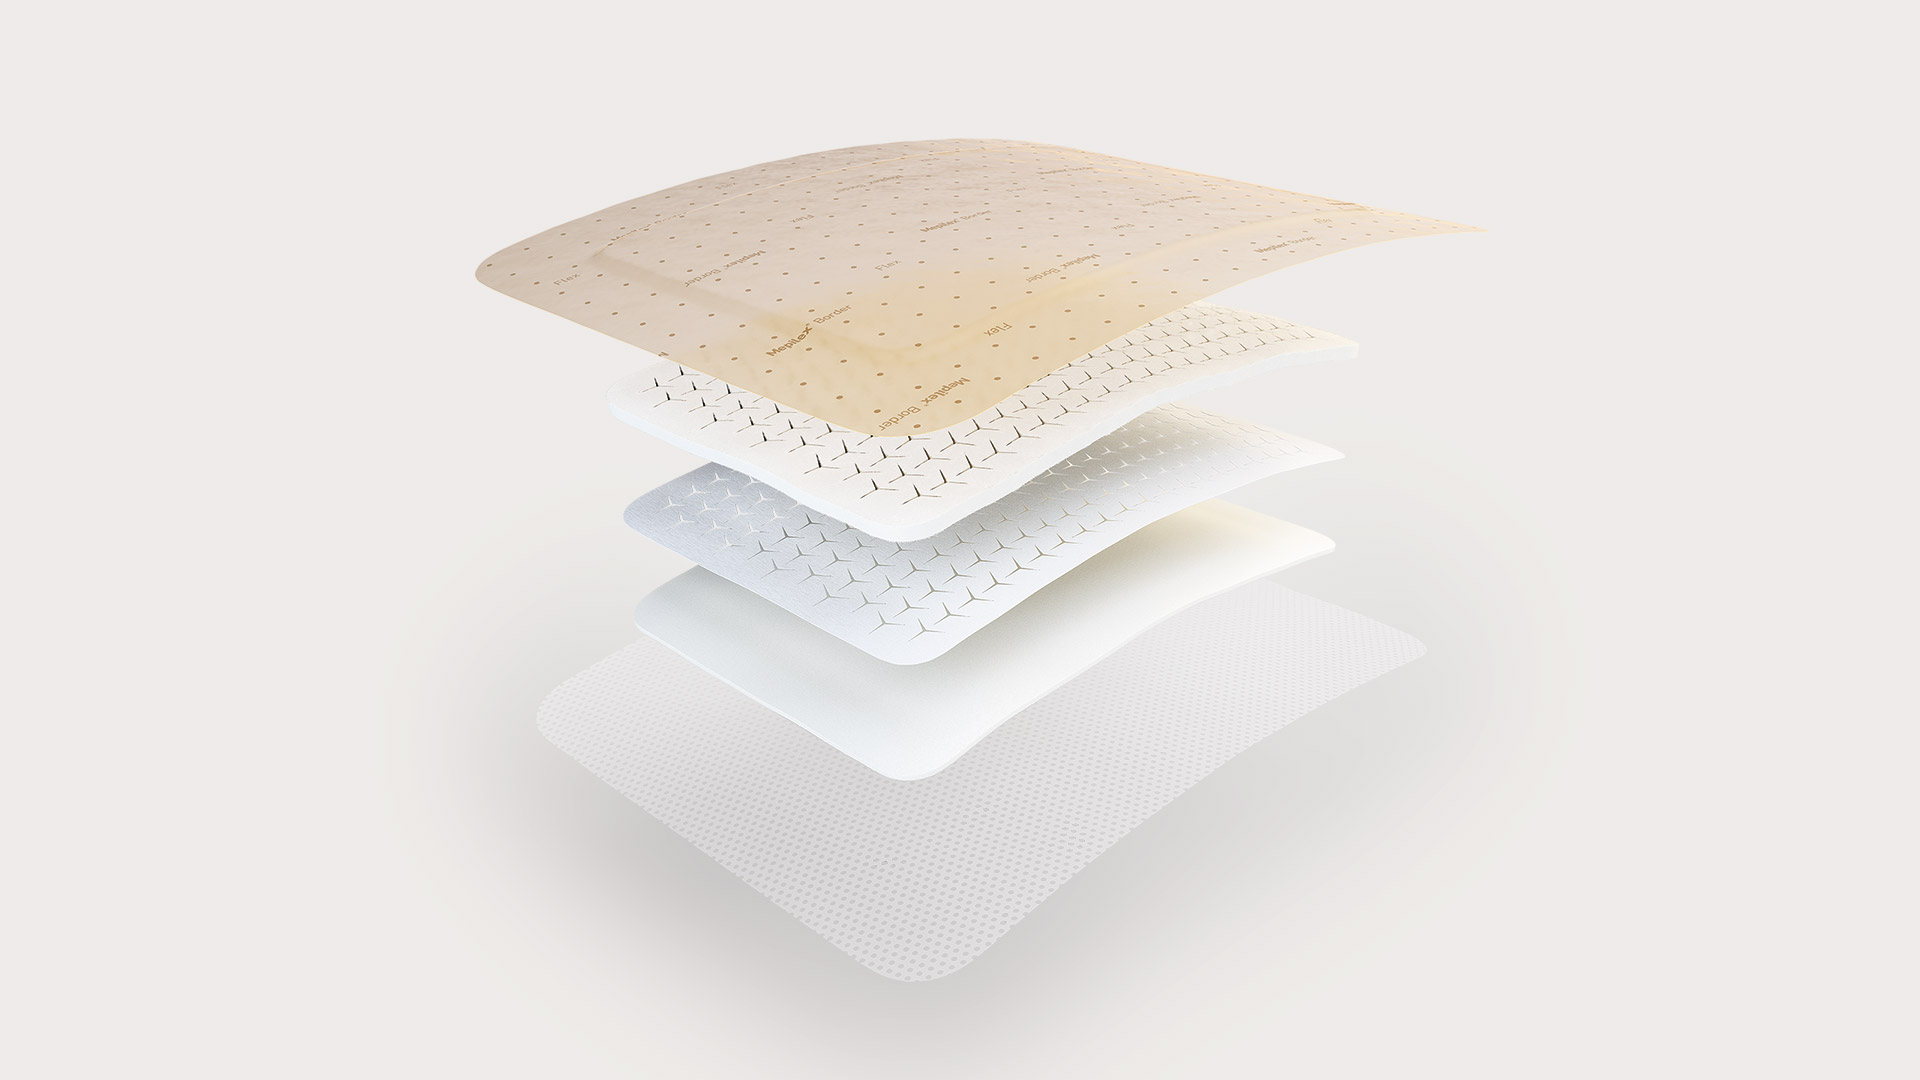 Mepilex Border Flex advanced foam dressing with extra conformability